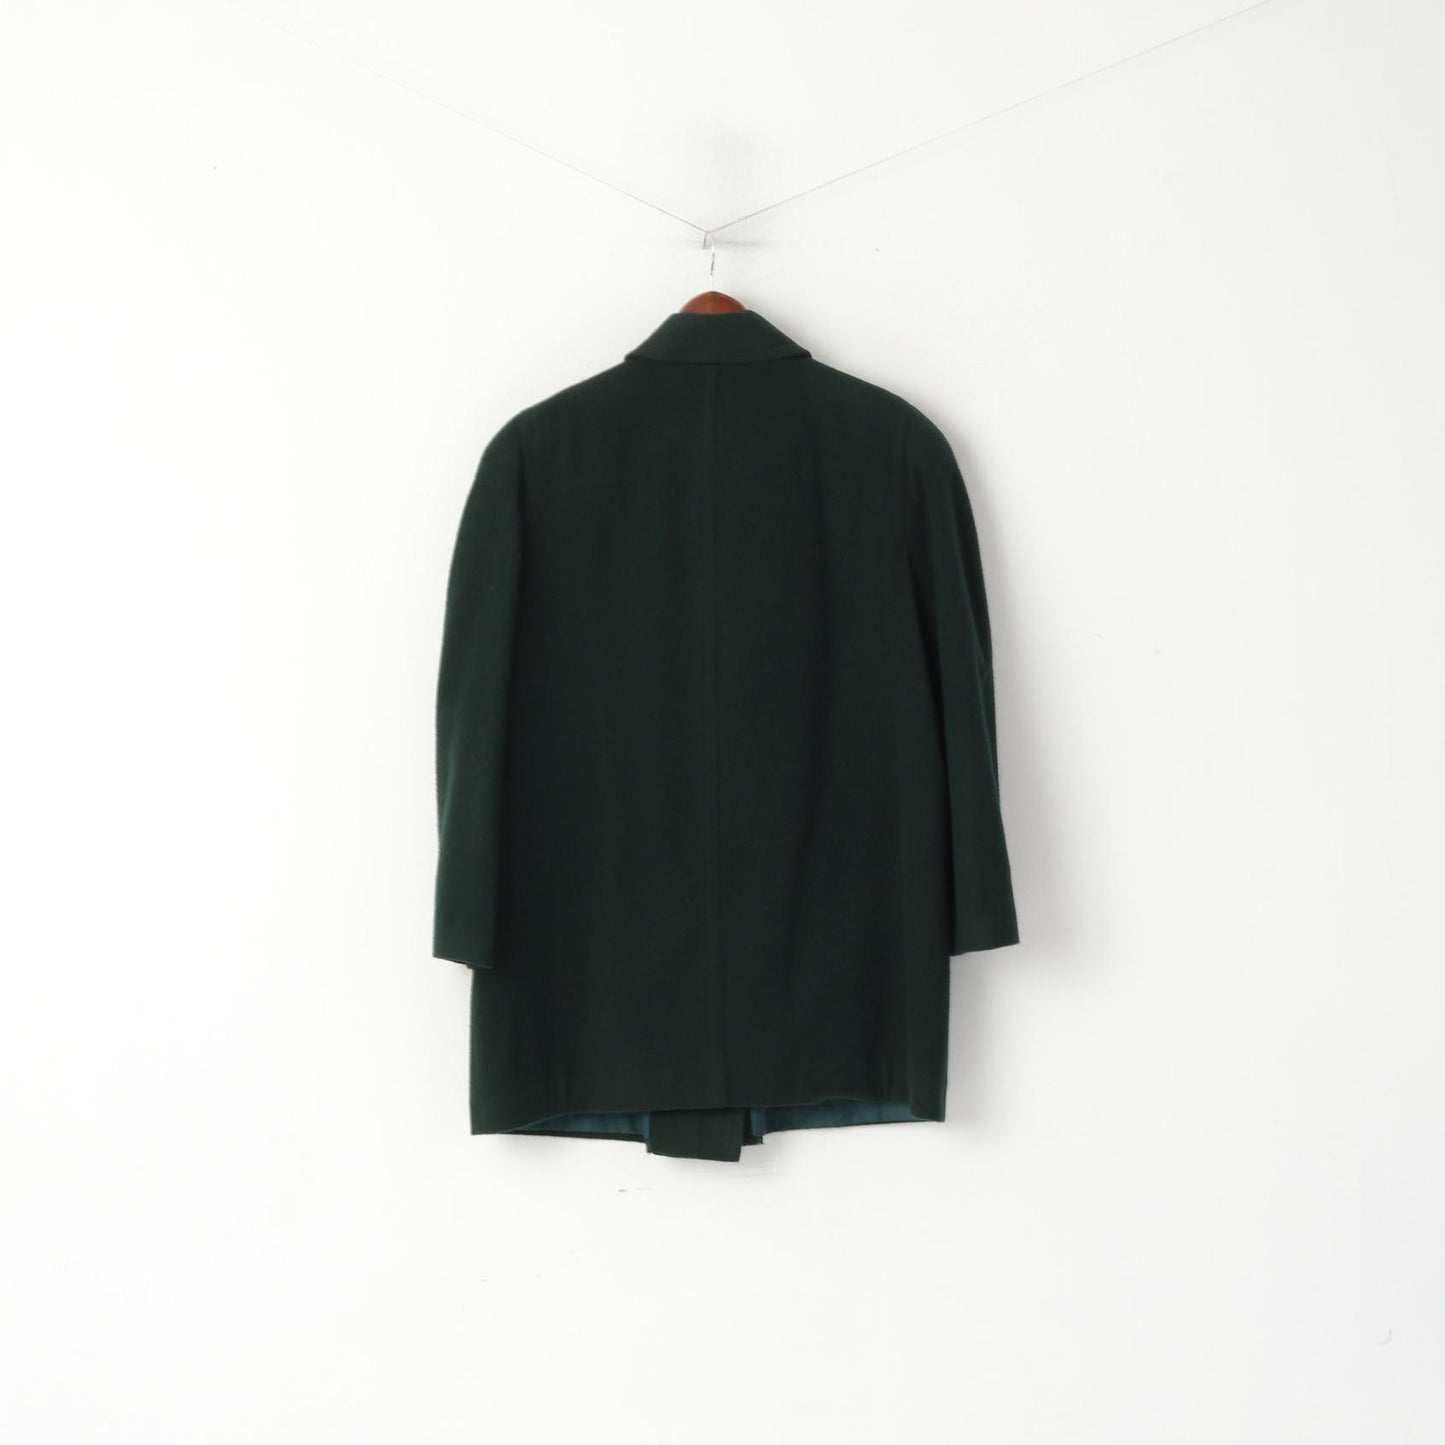 Astraka Women 16 XL Coat Green Wool Vintage Double Breasted Classic Jacket